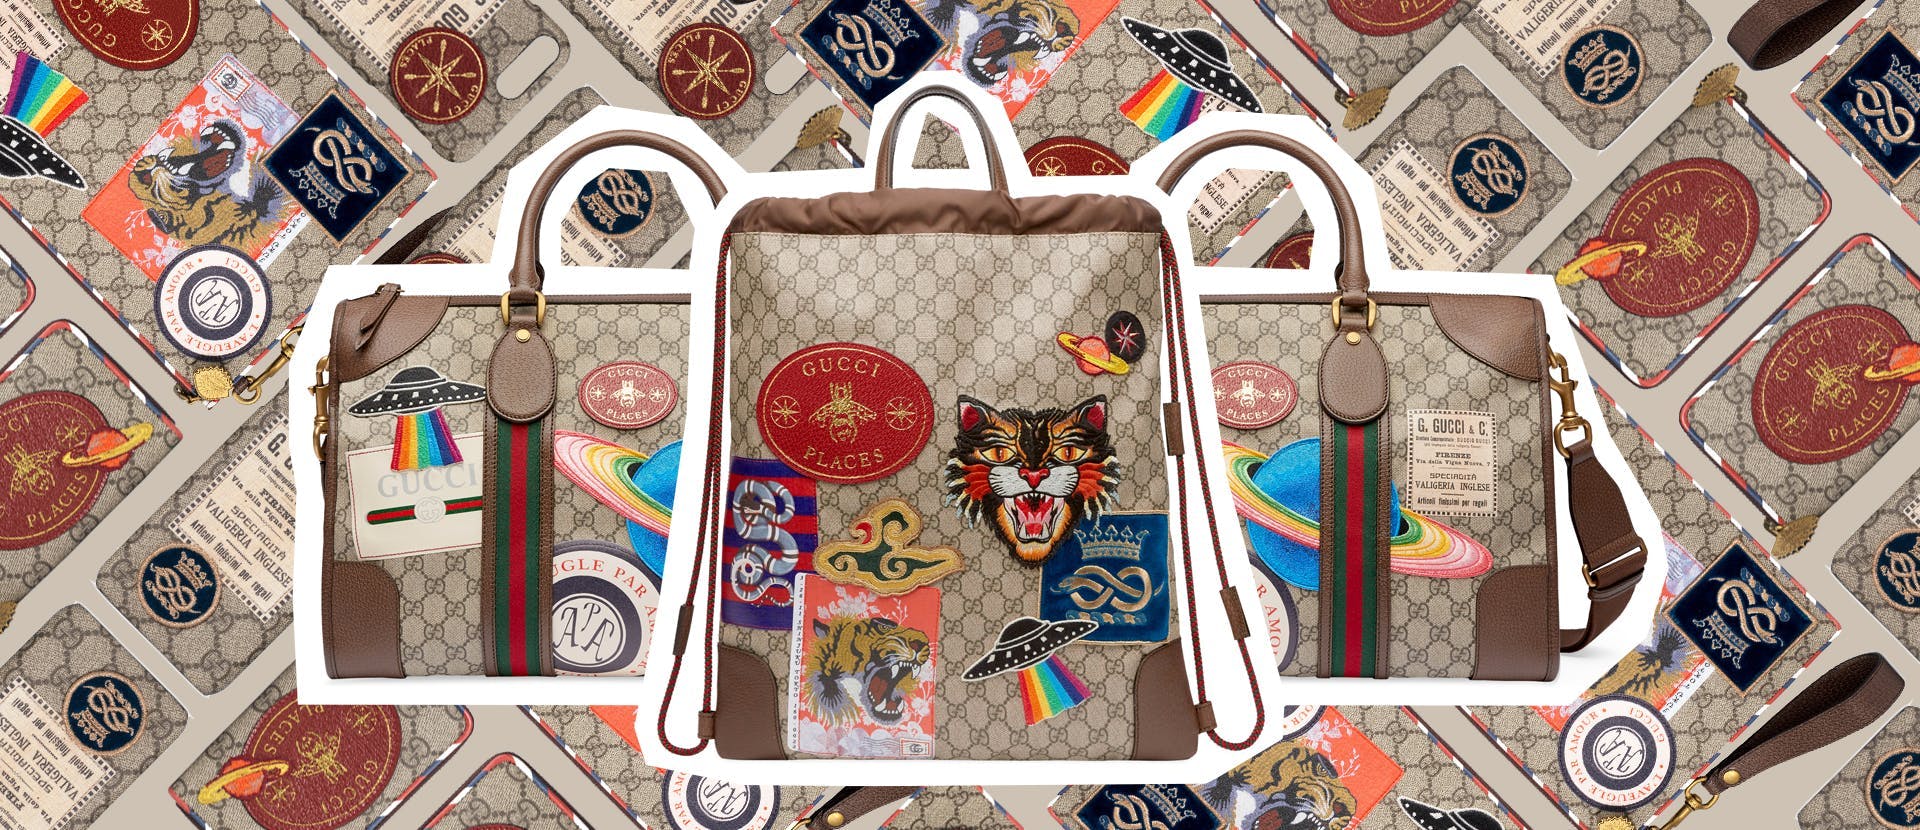 bag accessories accessory handbag purse